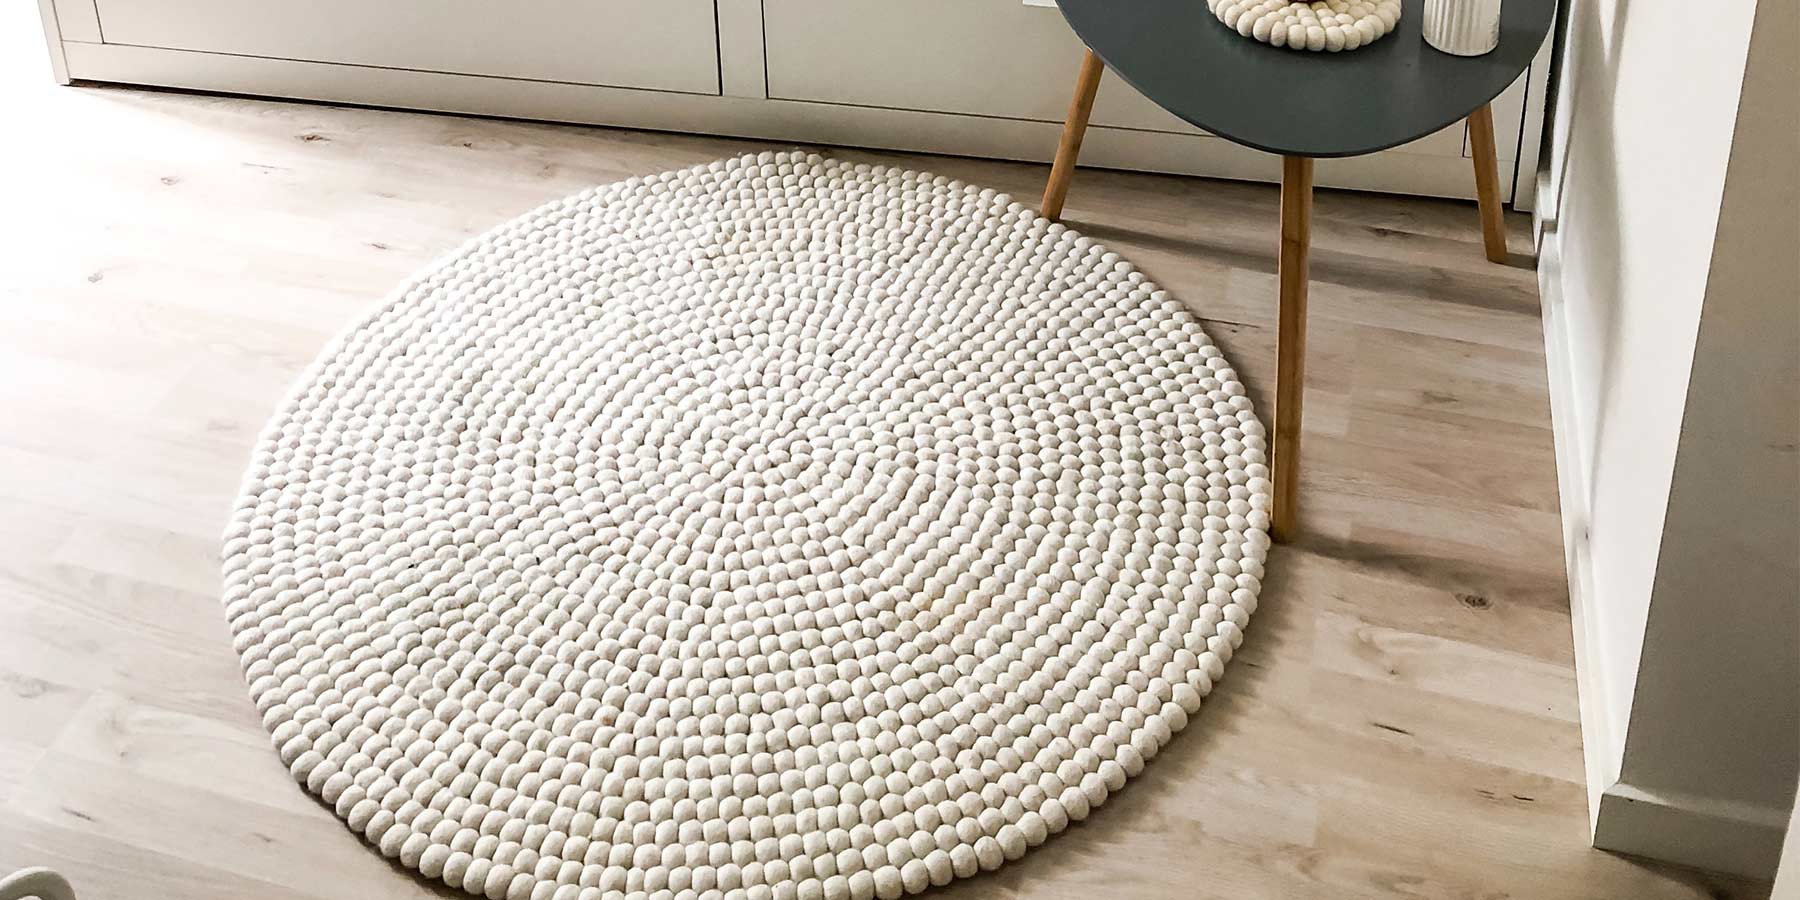 White woven circular area rug on a light wood floor.